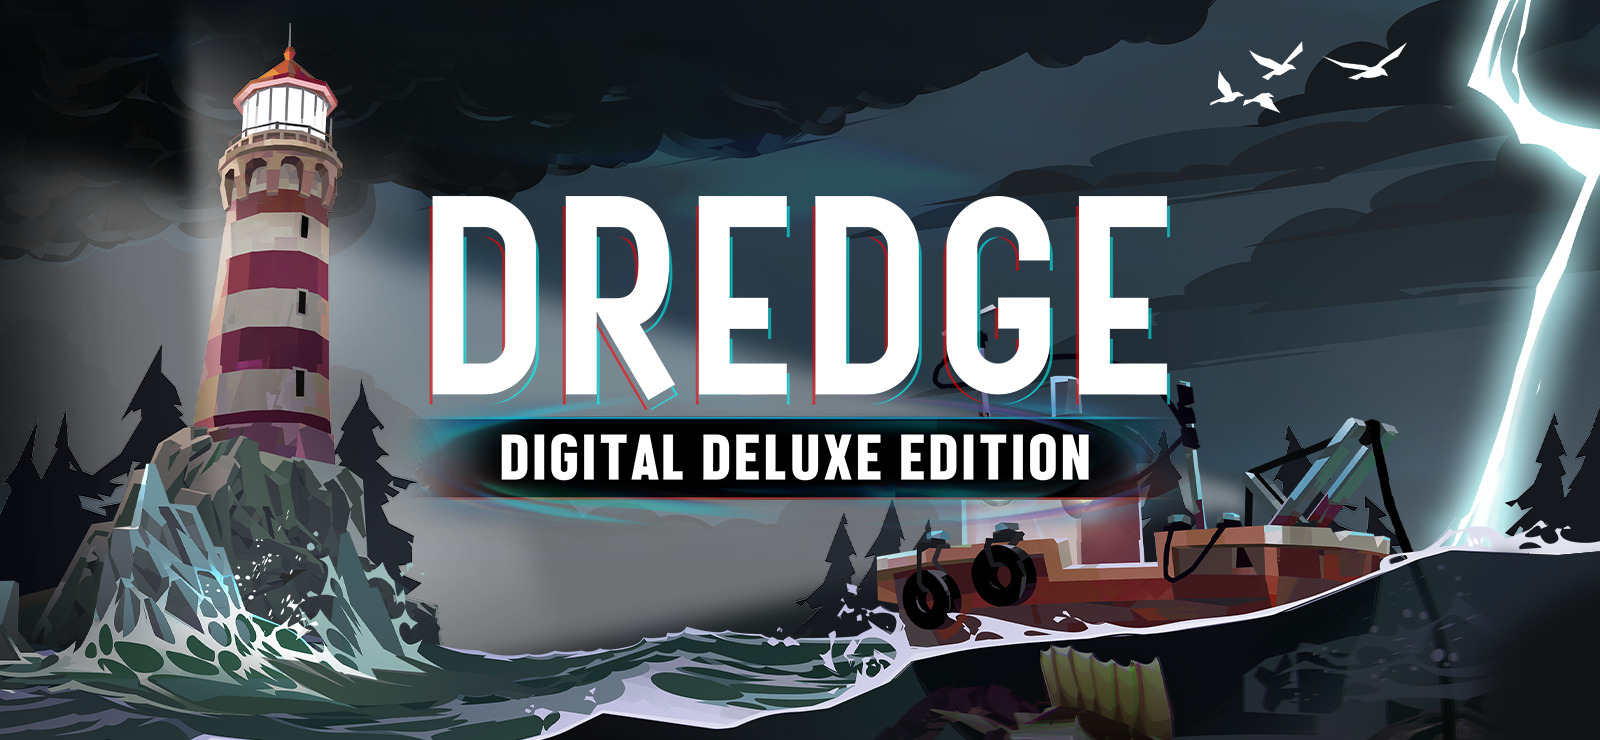 DREDGE Digital Deluxe Edition